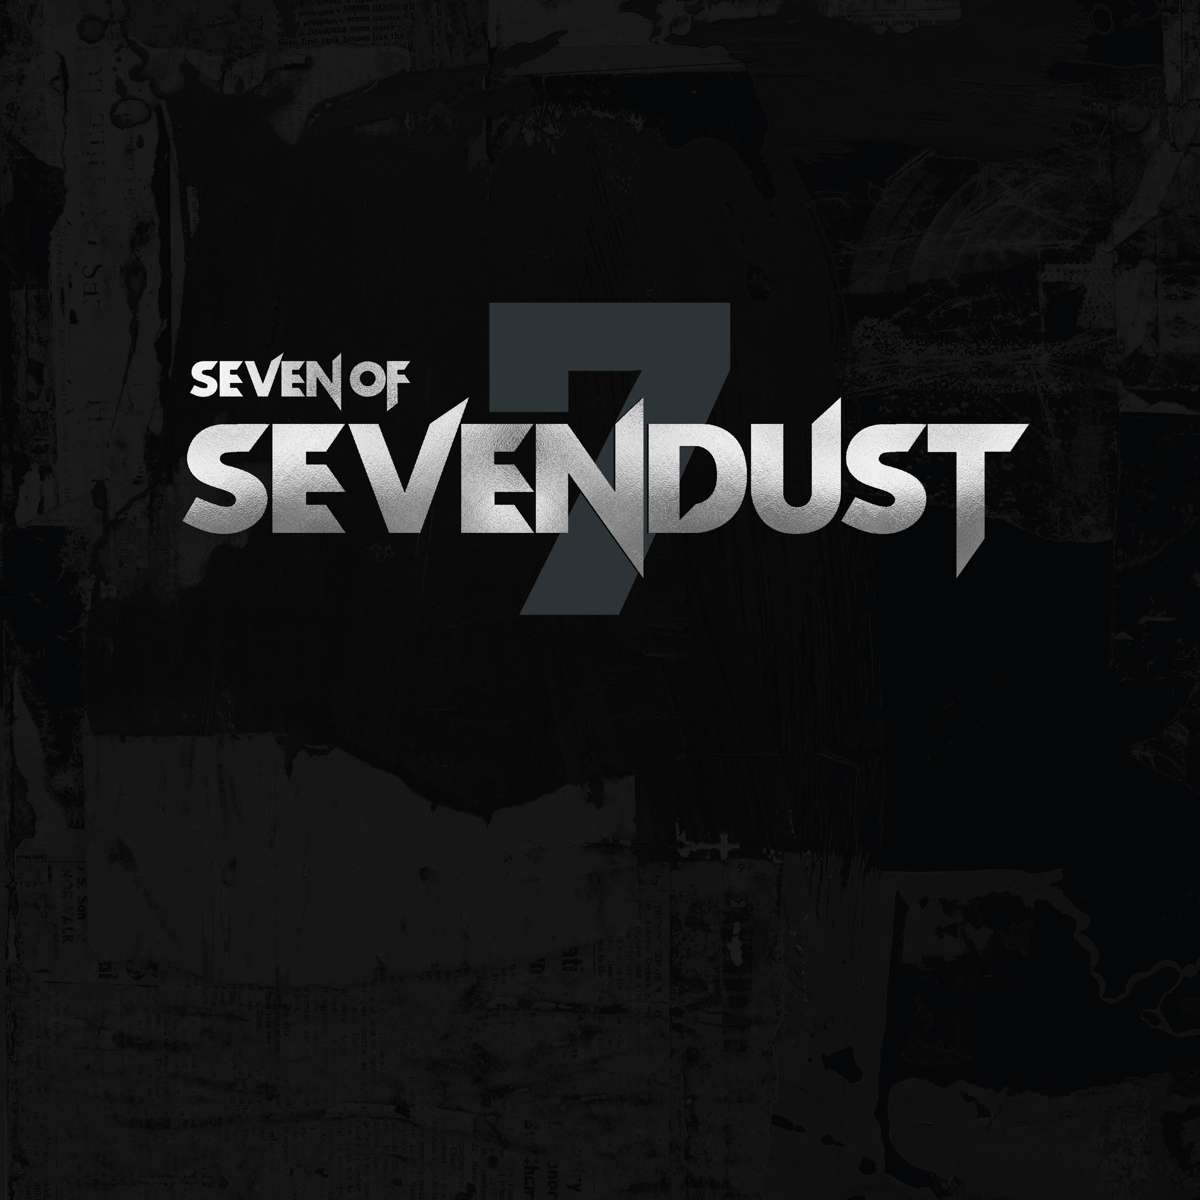 Sevendust (USA) – Seven Of Sevendust